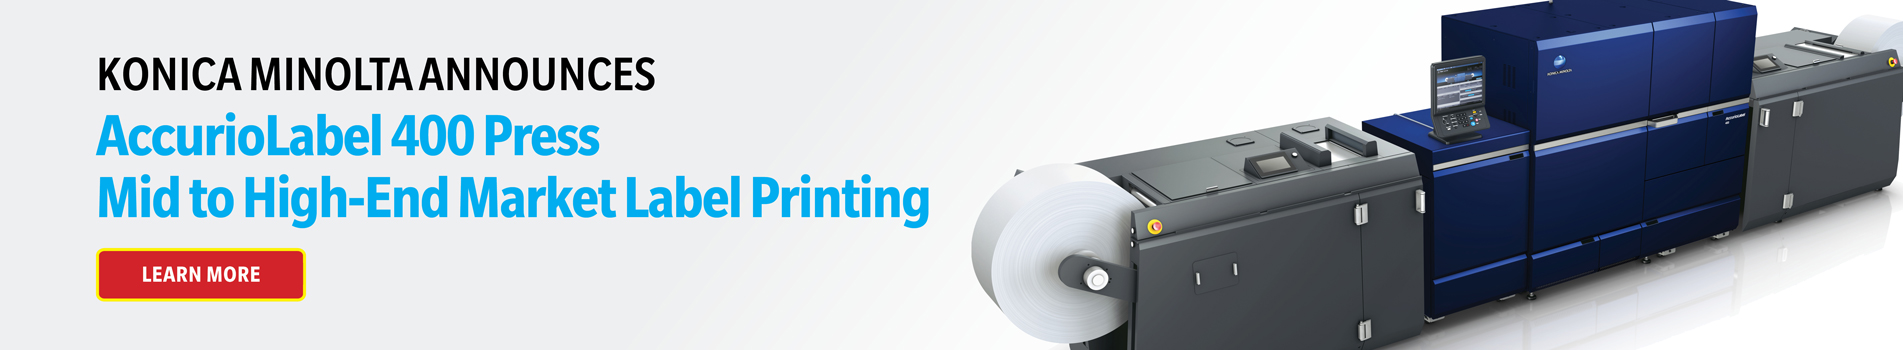 Konica Minolta Announces AccurioLabel 400 High-End Market Label Printing